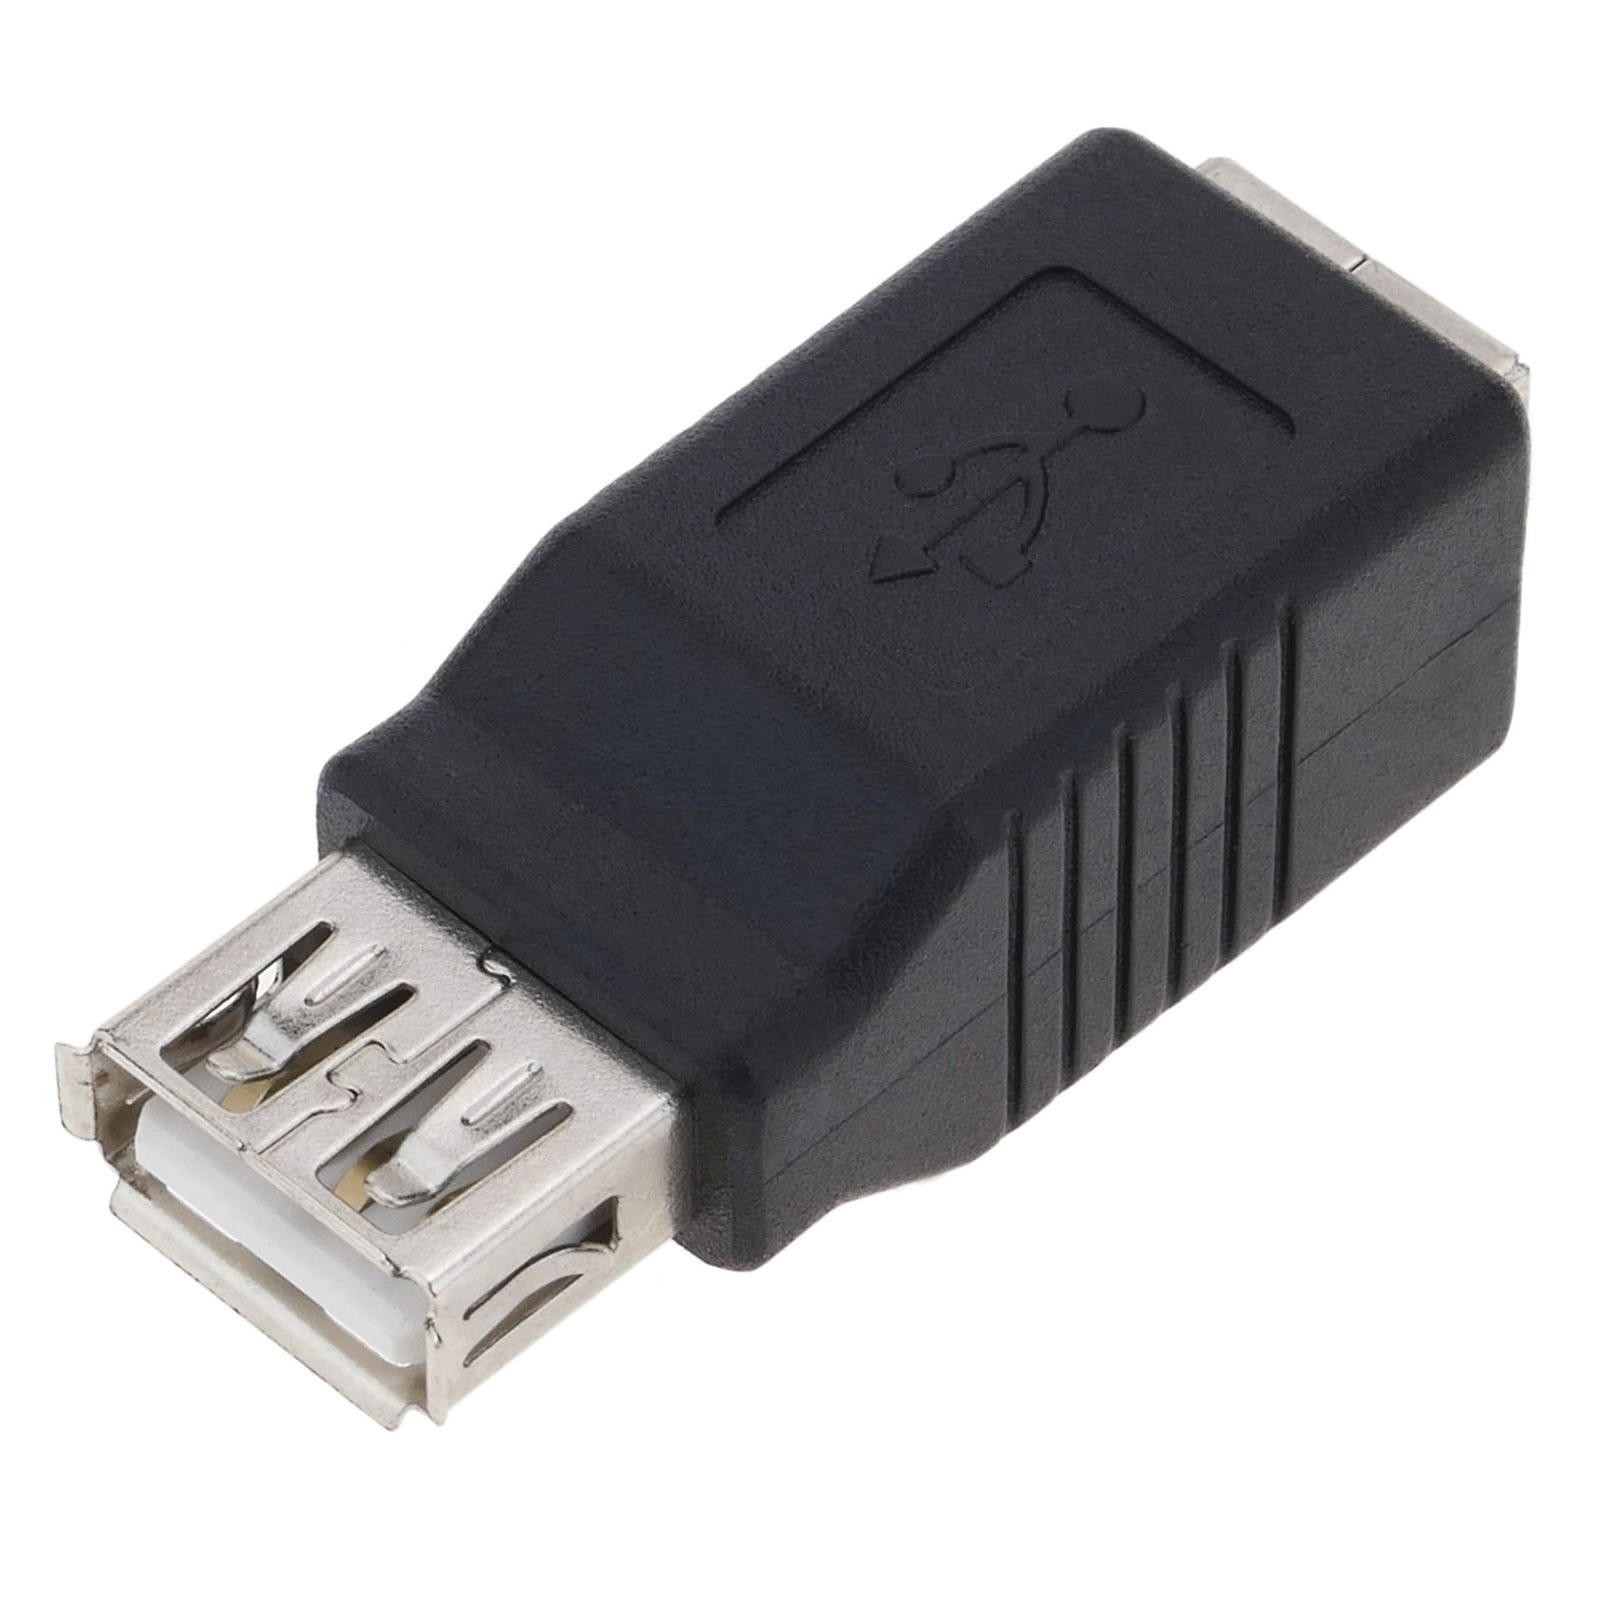 Adattatore USB tipo A femmina a USB tipo B femmina in colore nero